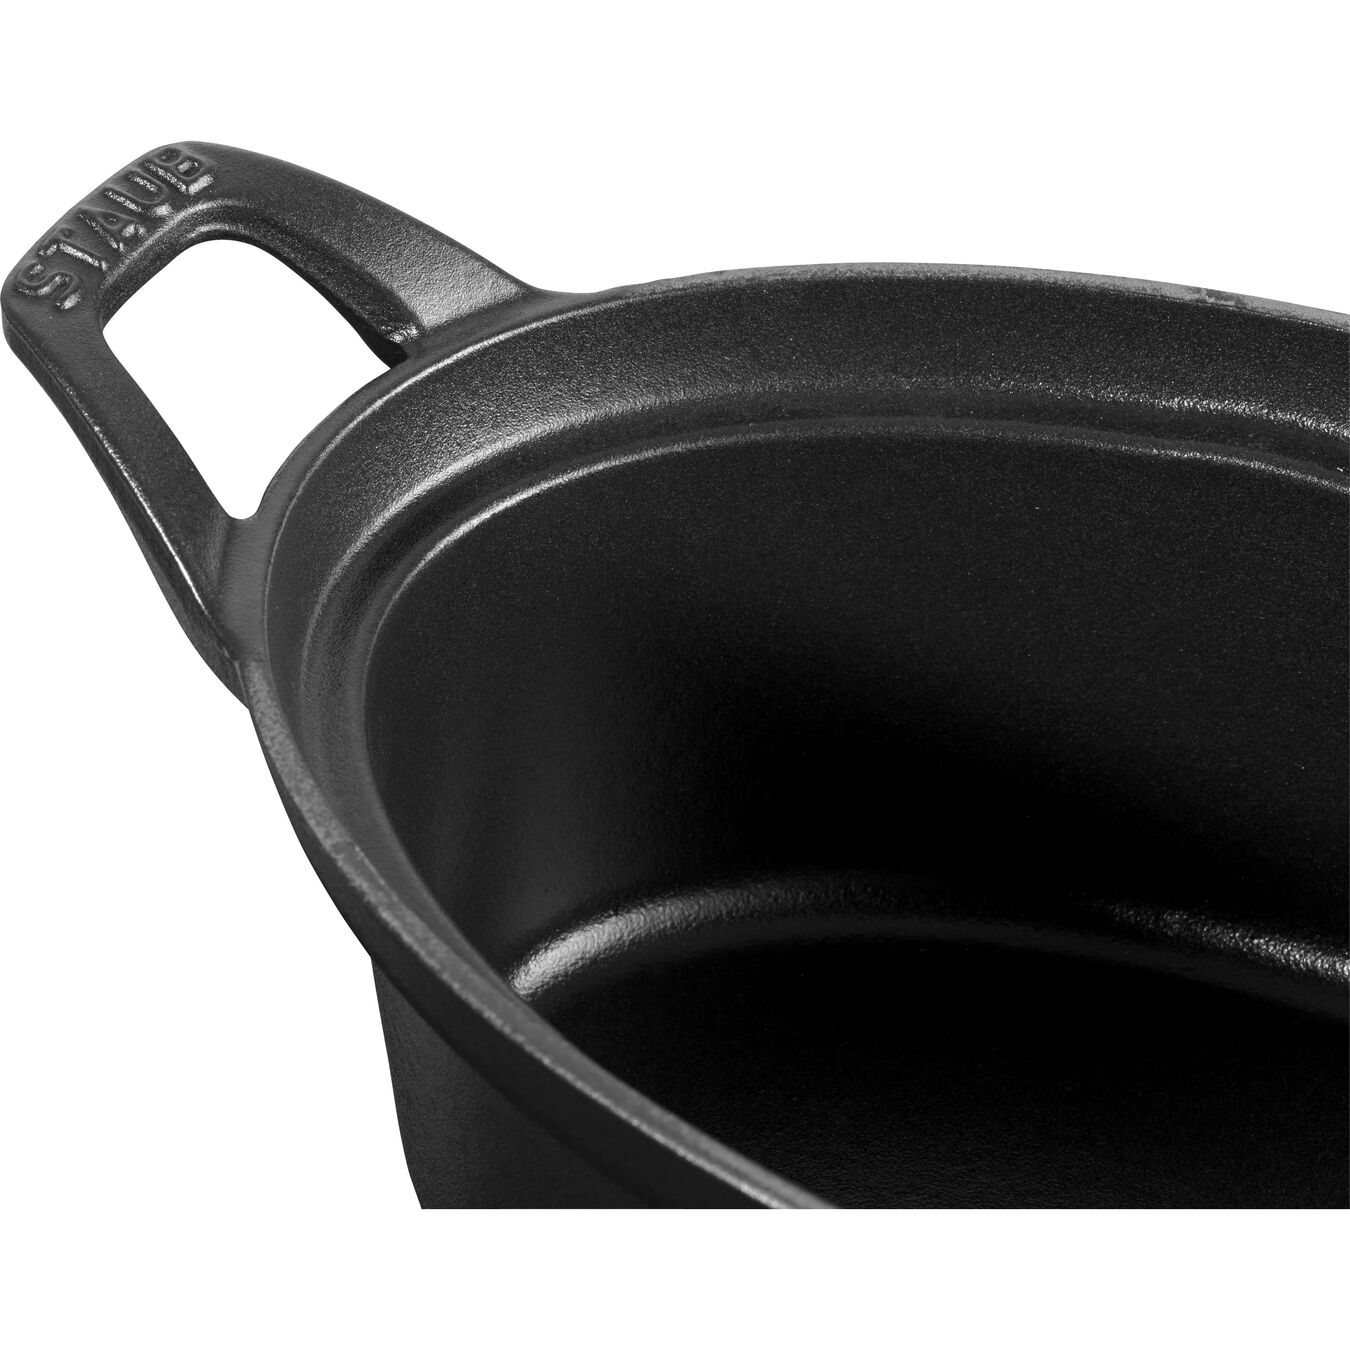 1.7 l cast iron oval La Coquette, black,,large 4